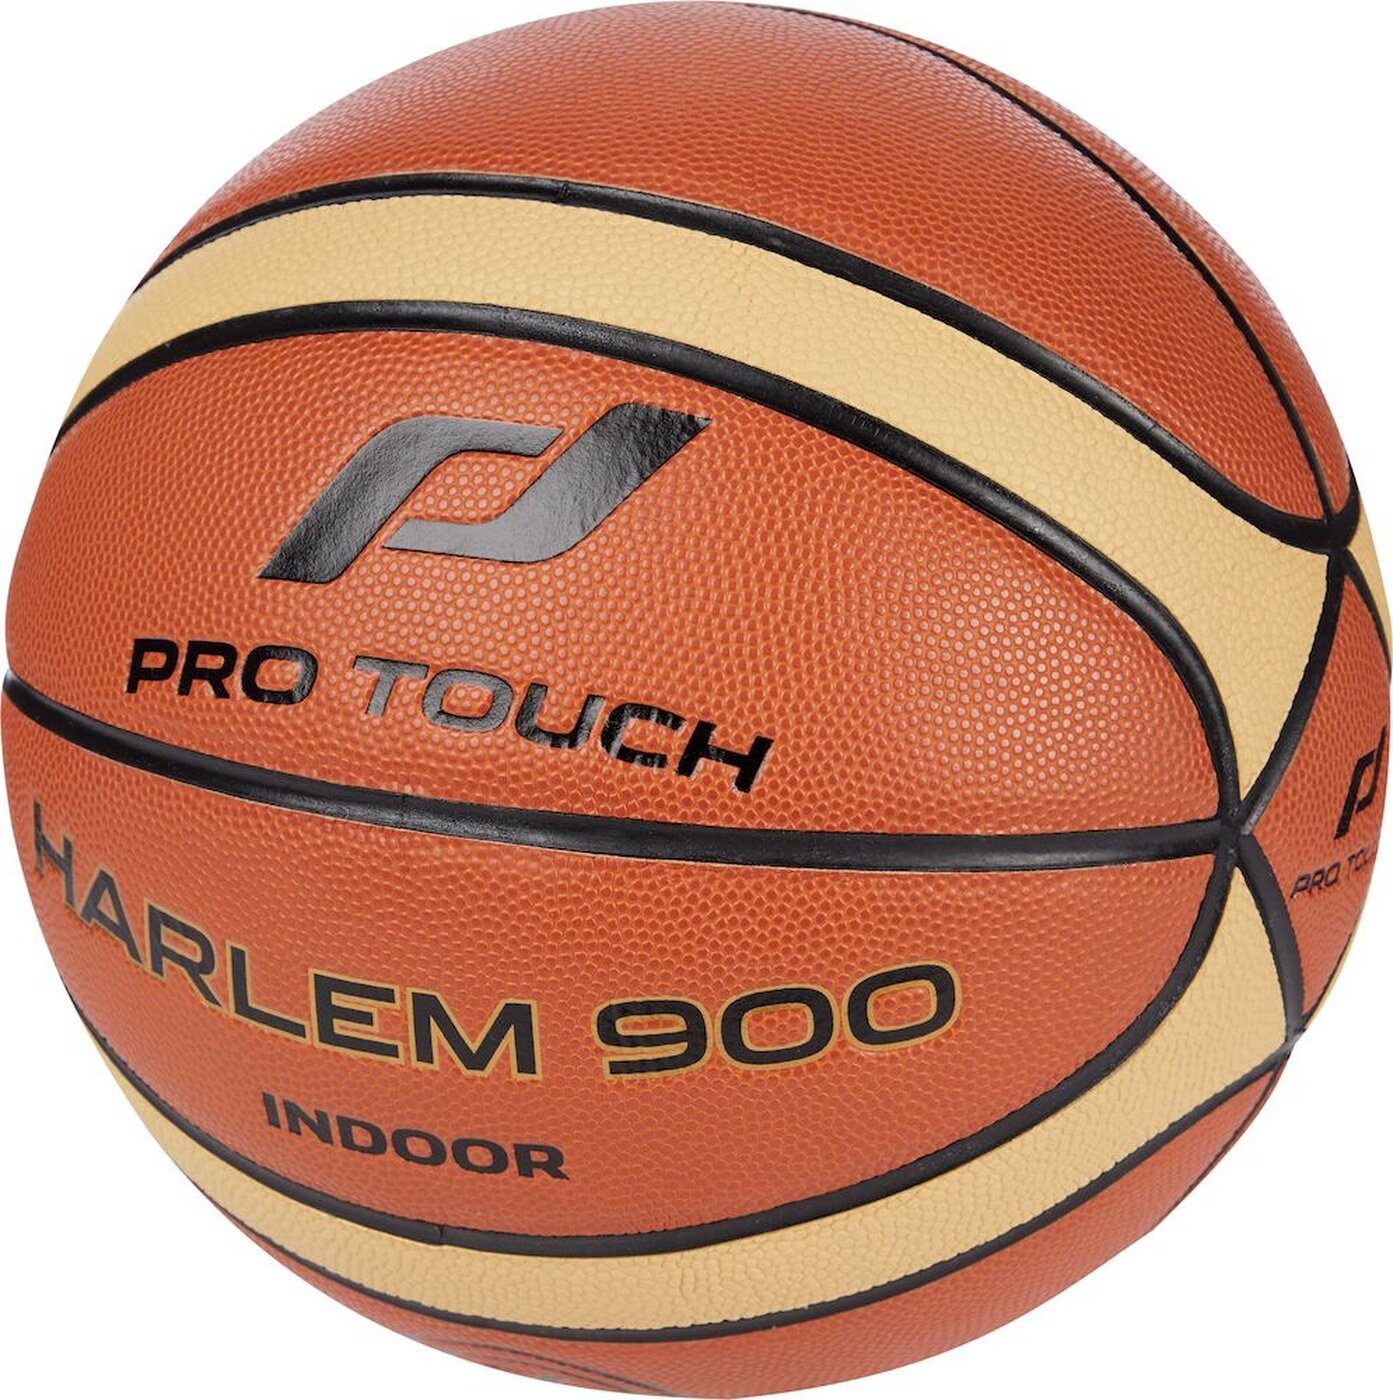 900 Basketball Harlem Basketball Touch BROWN/BEIGE/BLACK/GO Pro